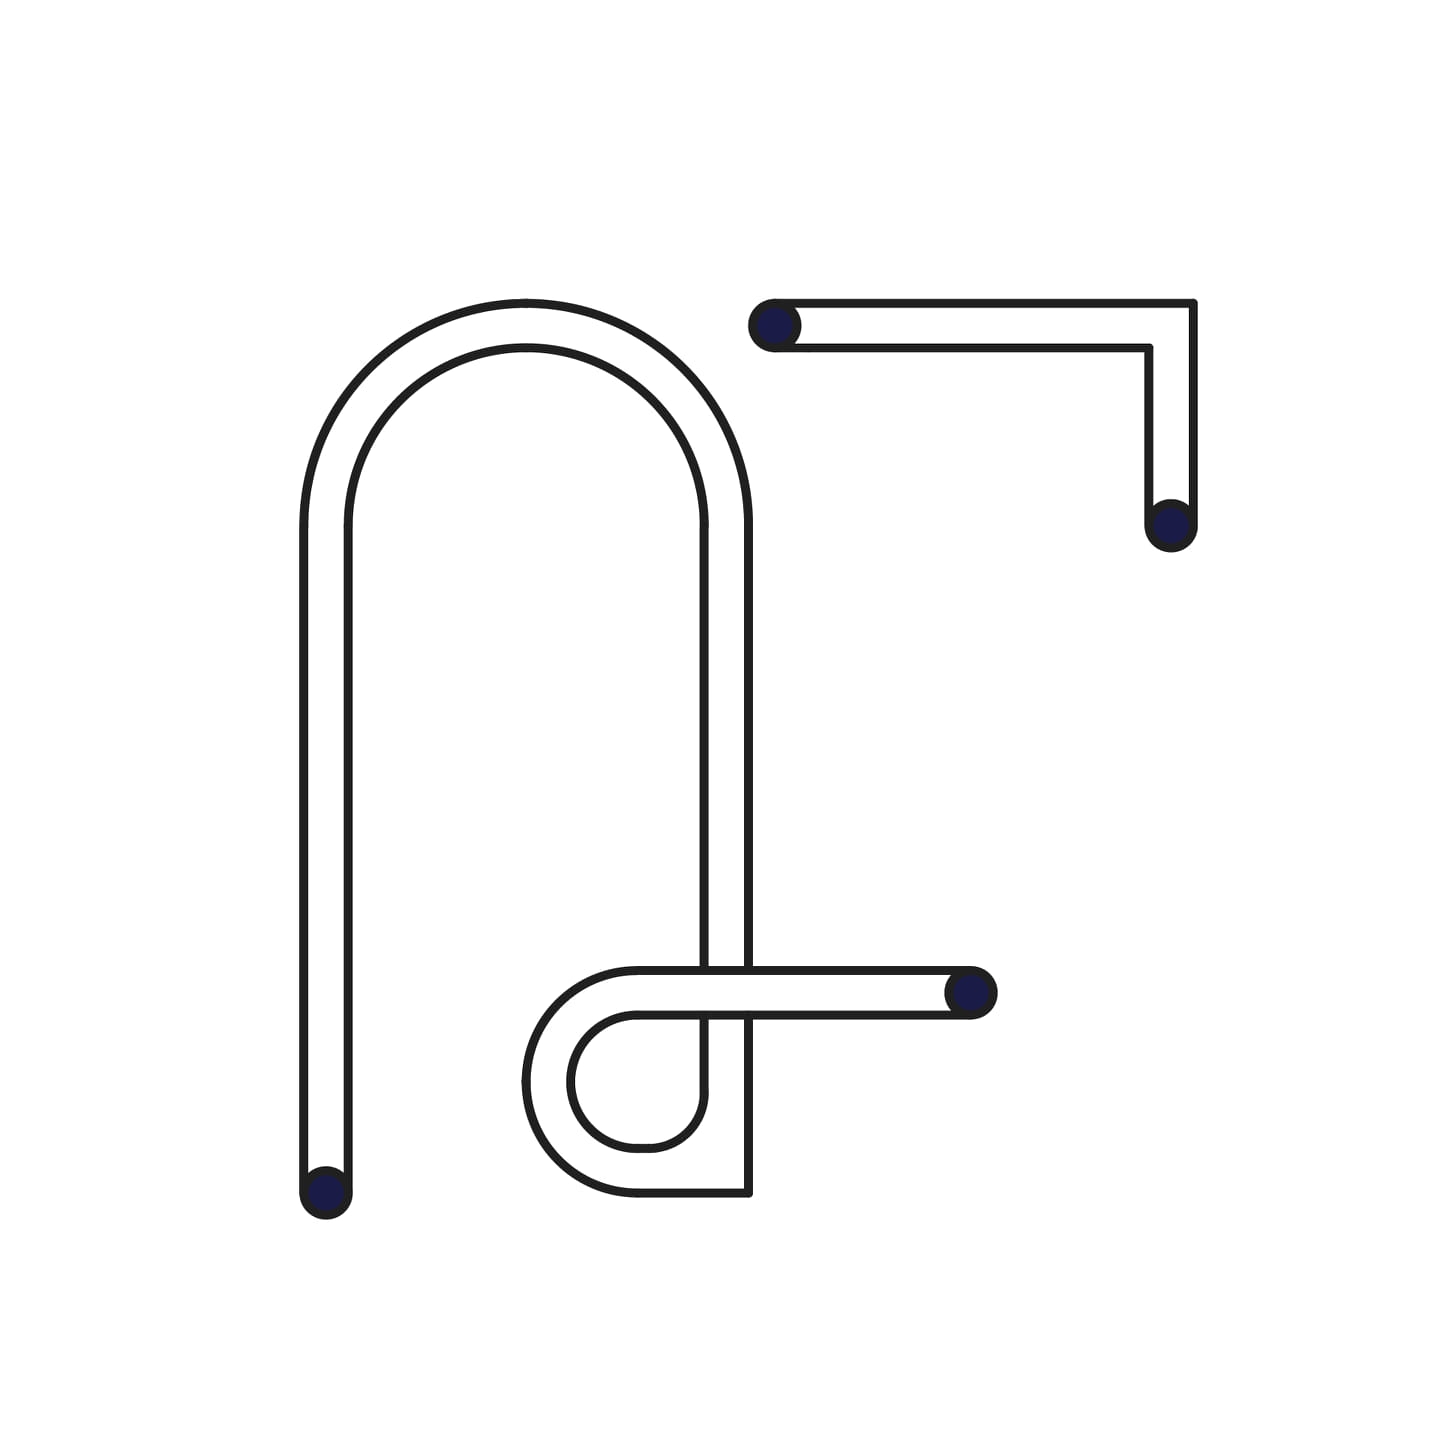 Ashfaq Fazil / Architecture + Urbanism Logo